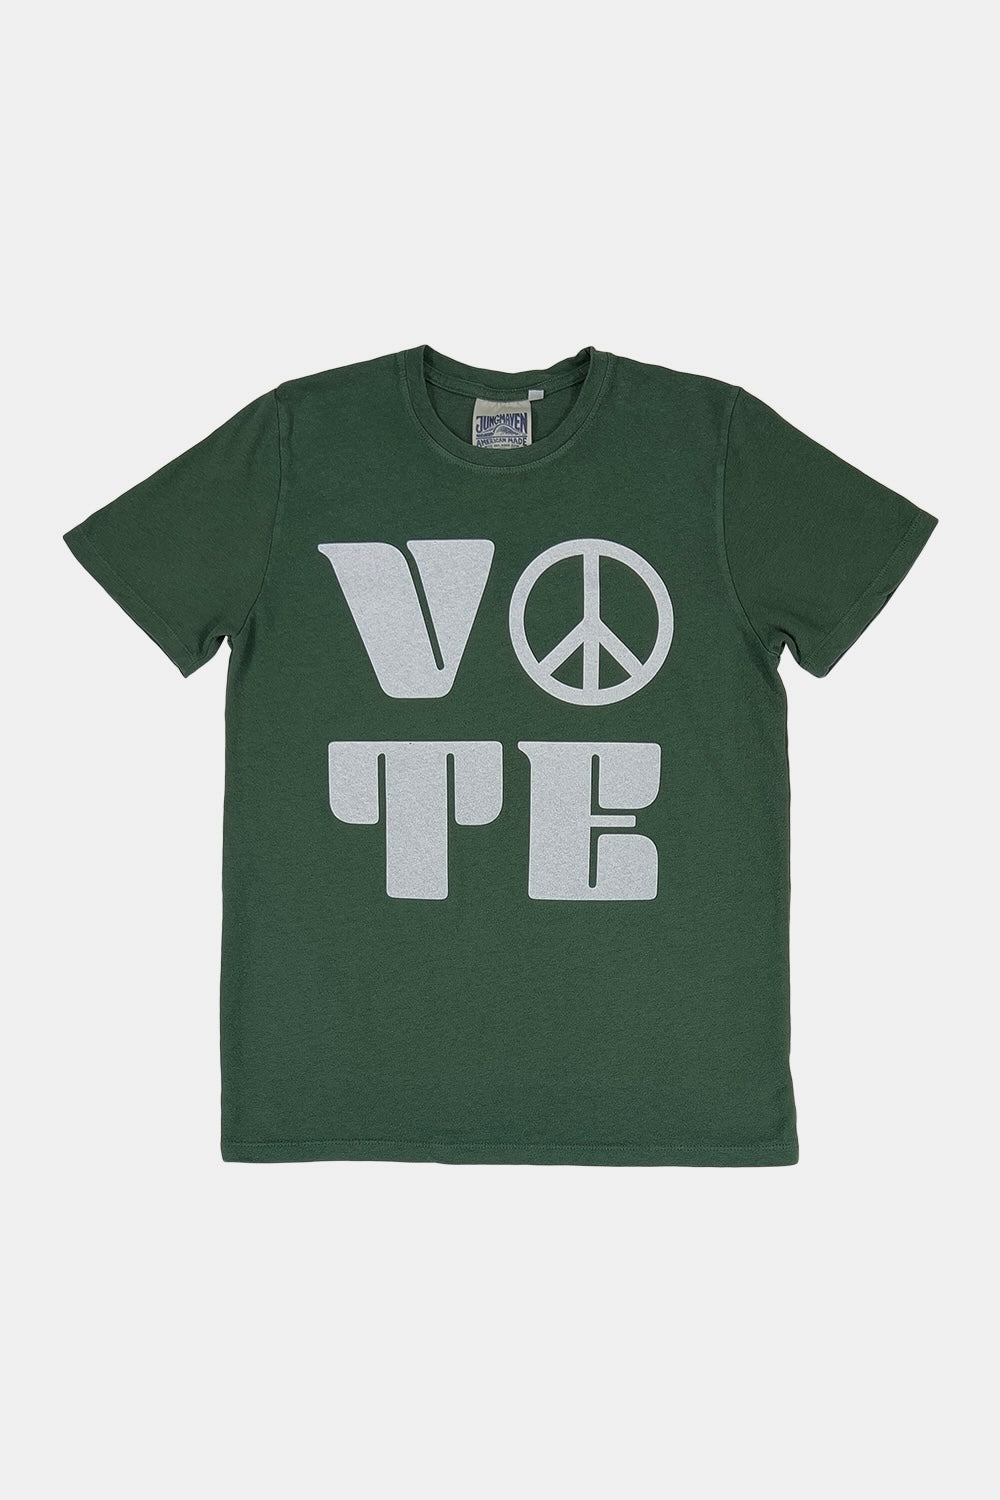 Vote Peace Baja Tee | Jungmaven Hemp Clothing & Accessories / Color: Hunter Green